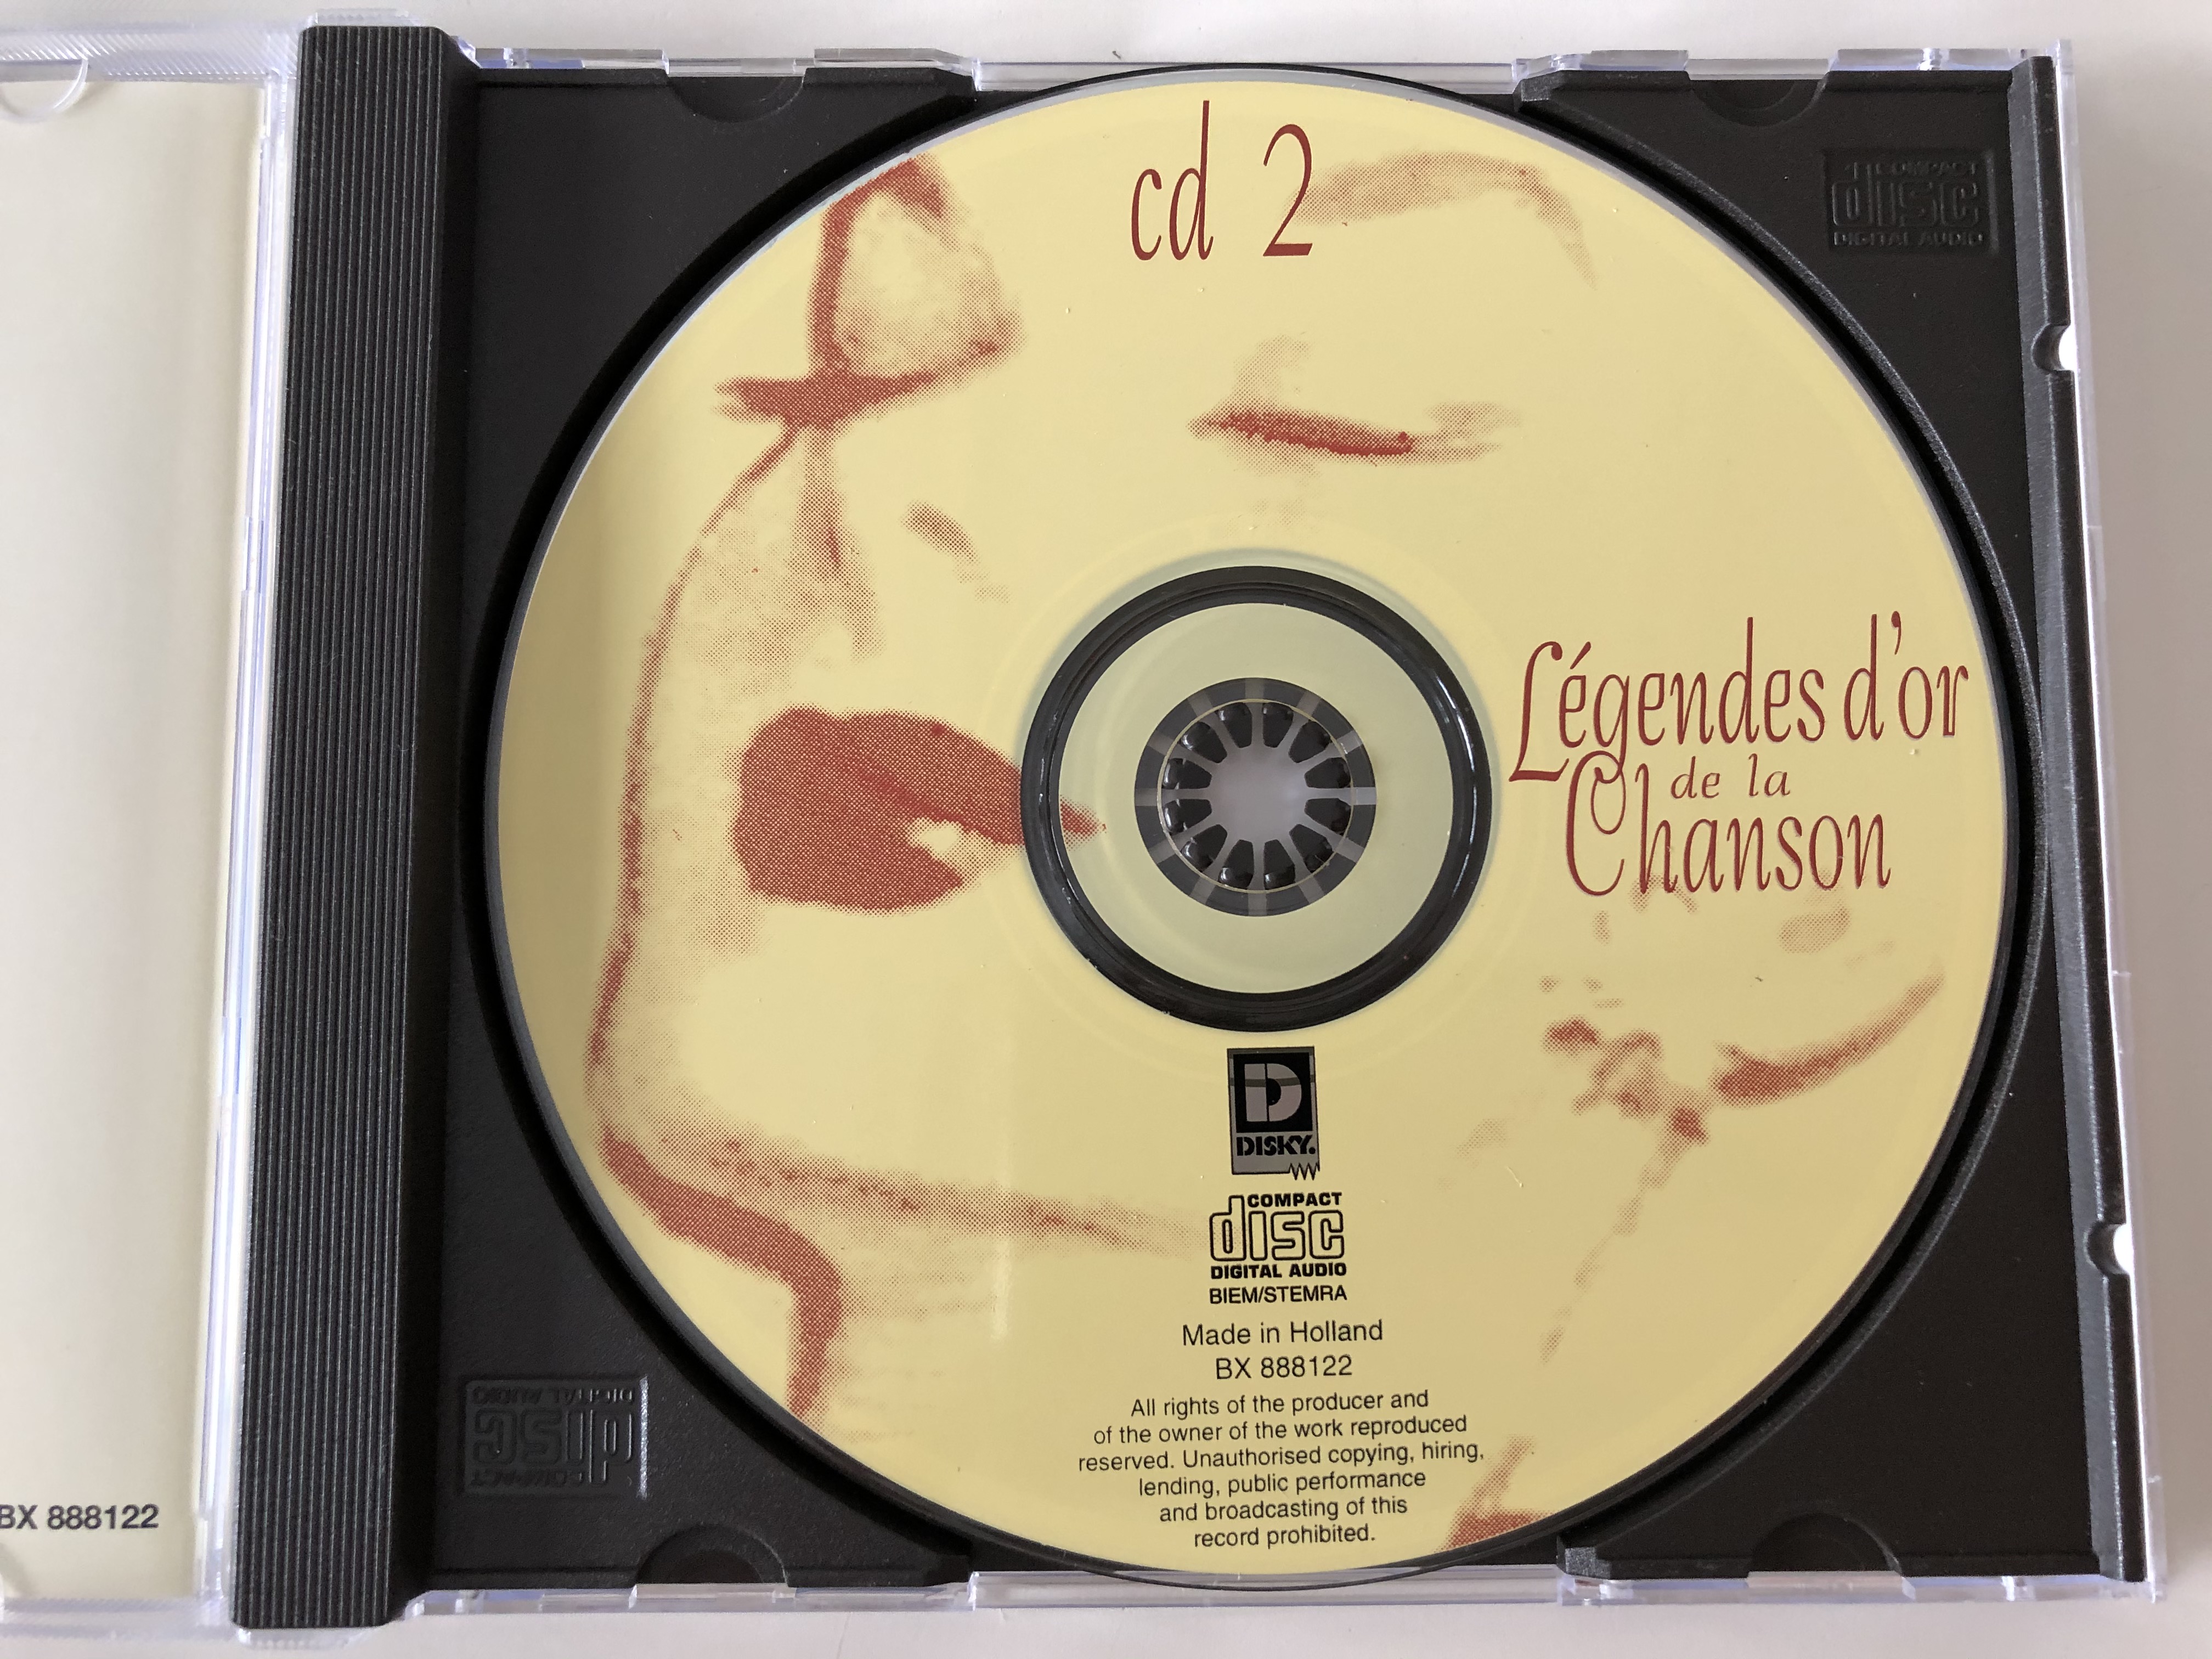 l-gendes-d-or-de-la-chanson-luis-mariano-maurice-chevalier-josephine-baker-fernandel-annie-cordy-cd-2-disky-audio-cd-1998-bx-888122-3-.jpg